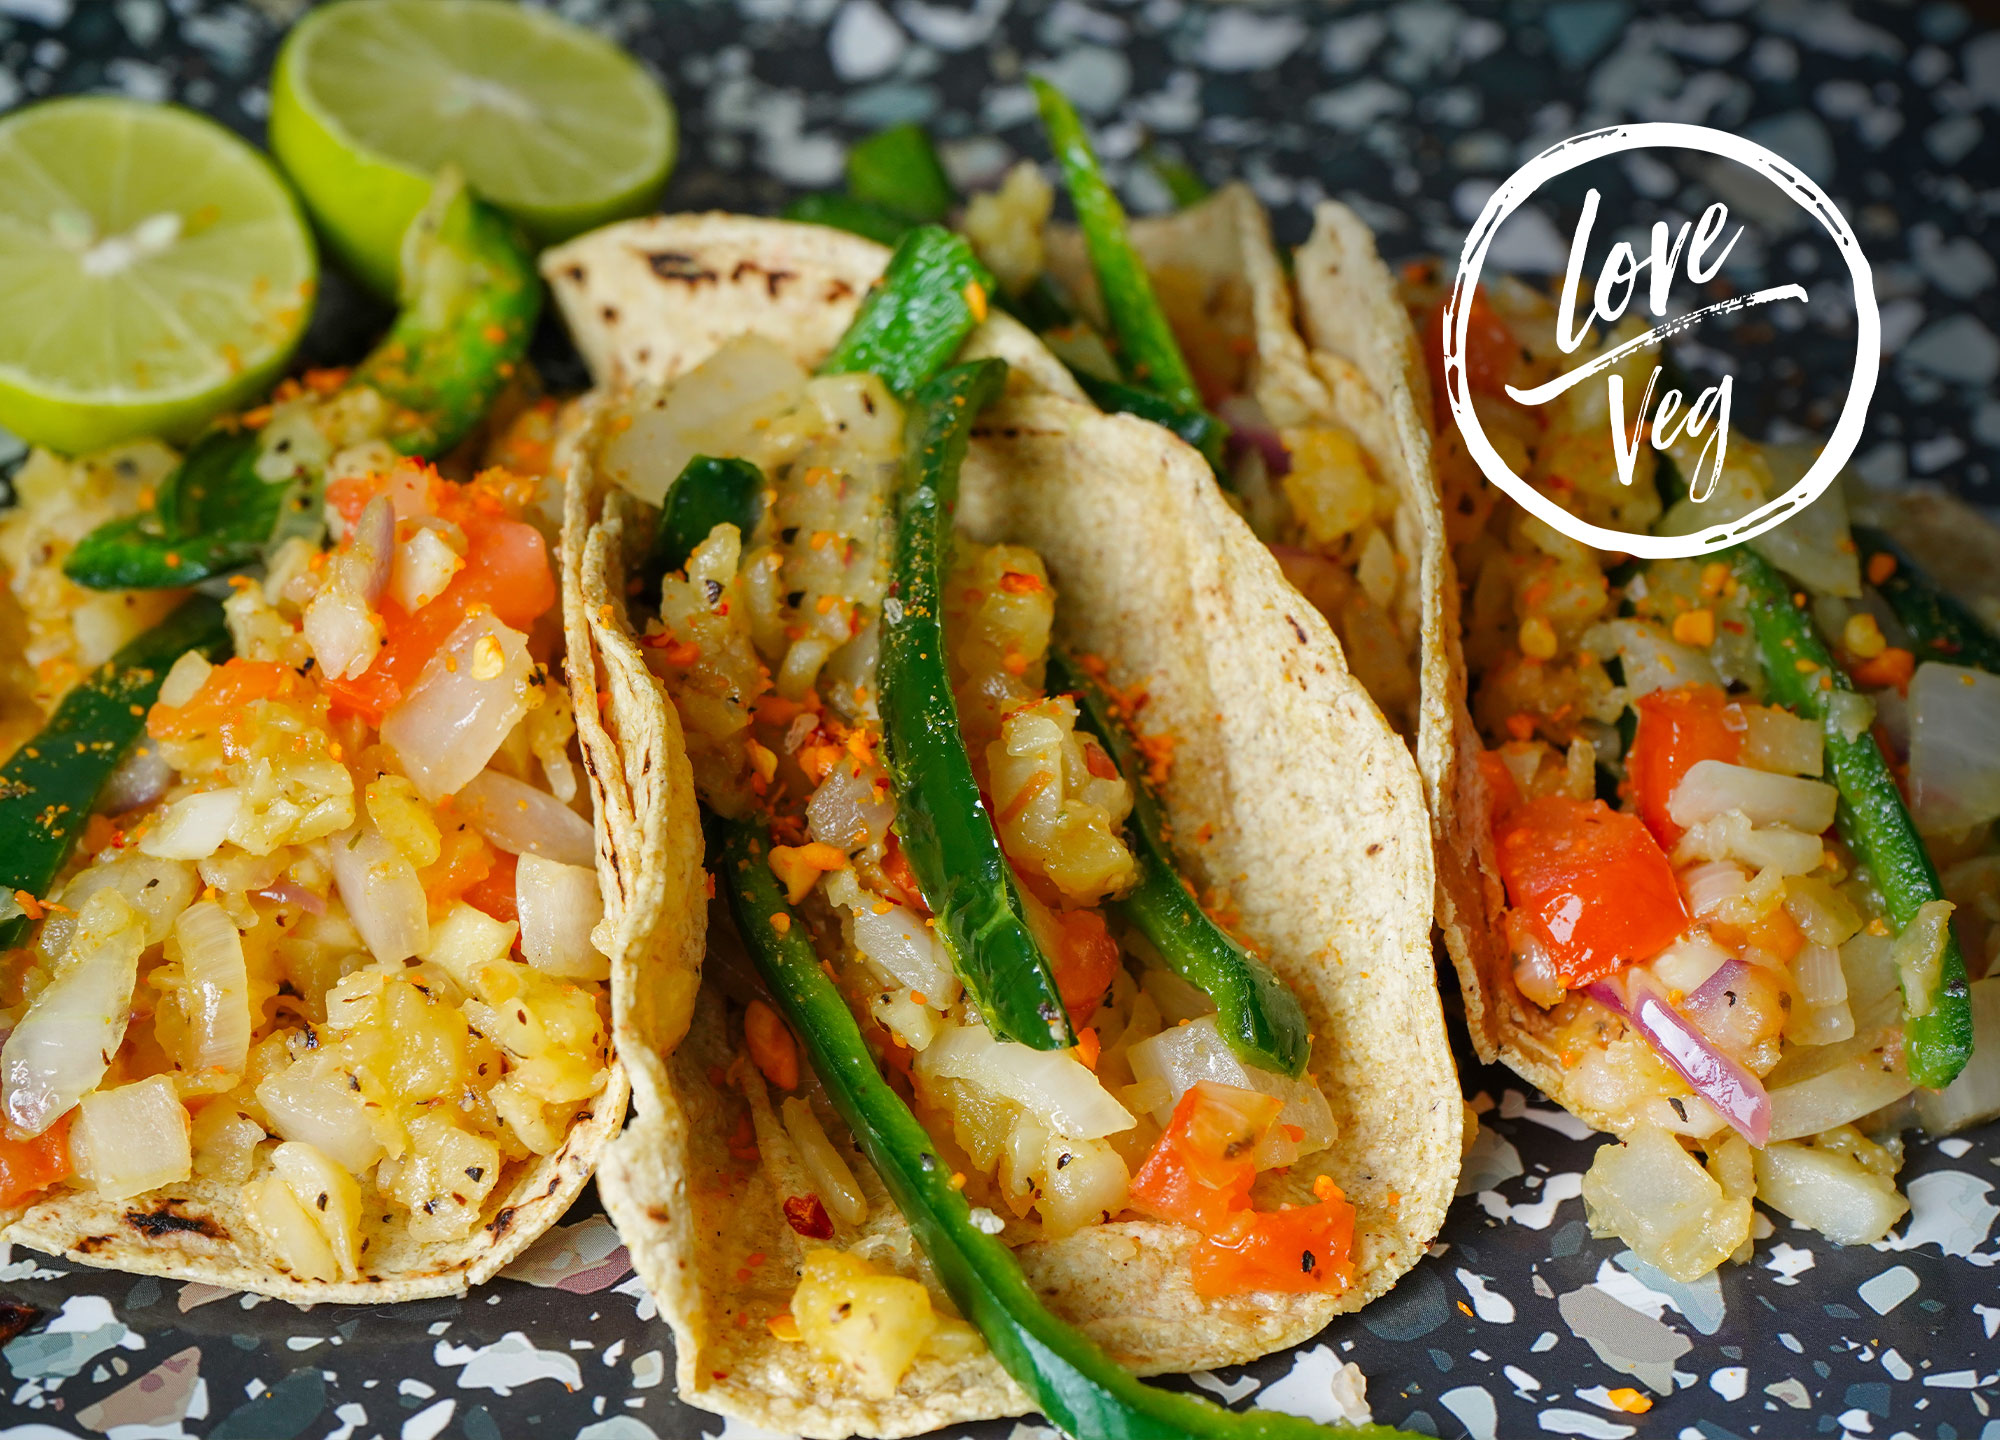 Tacos de rajas con papas a la mexicana | Love Veg